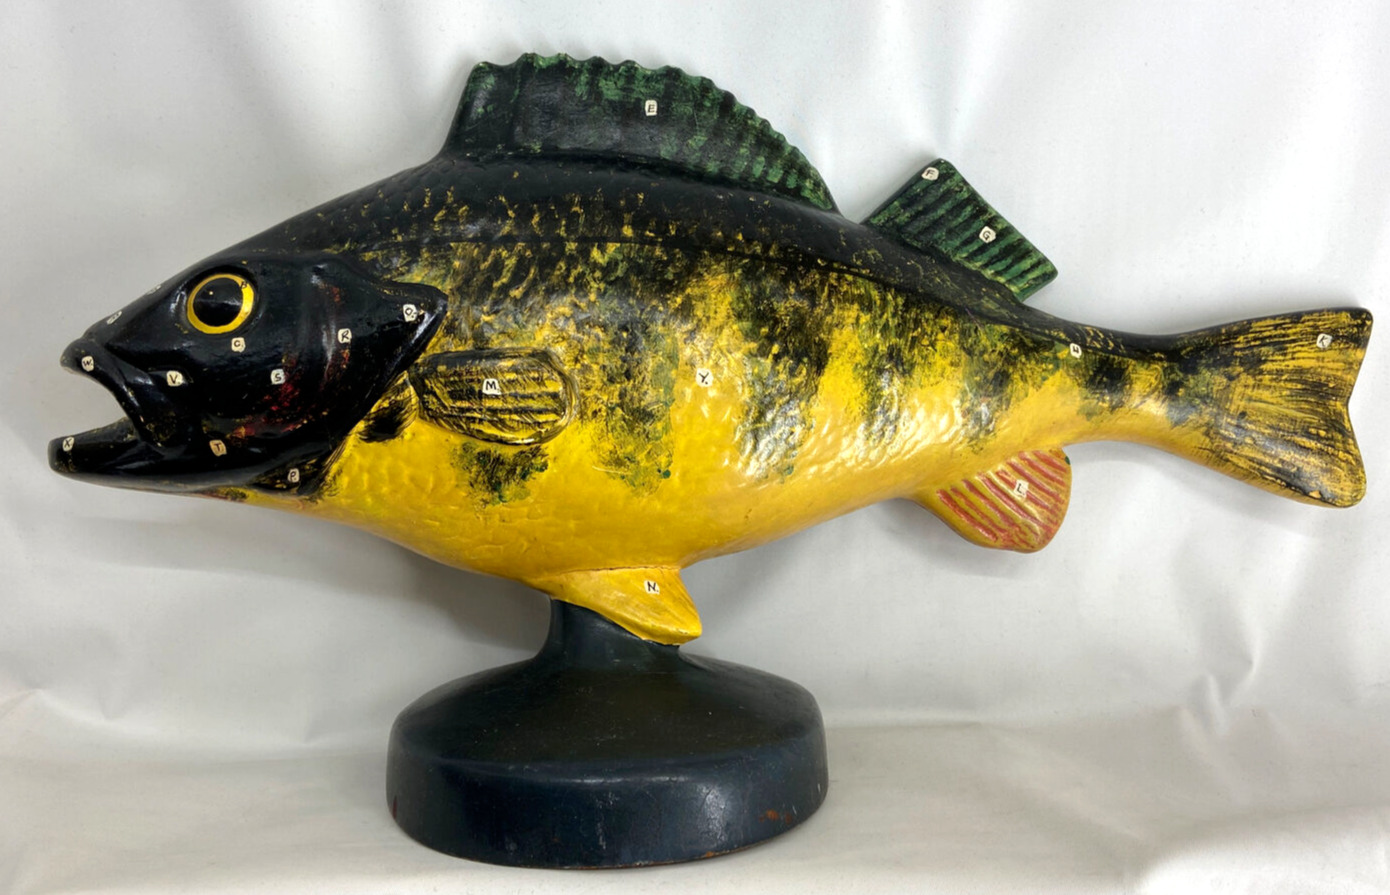 Vintage 1960s Turtox Latex Medical Fish 3D Model Biological Scientist Display